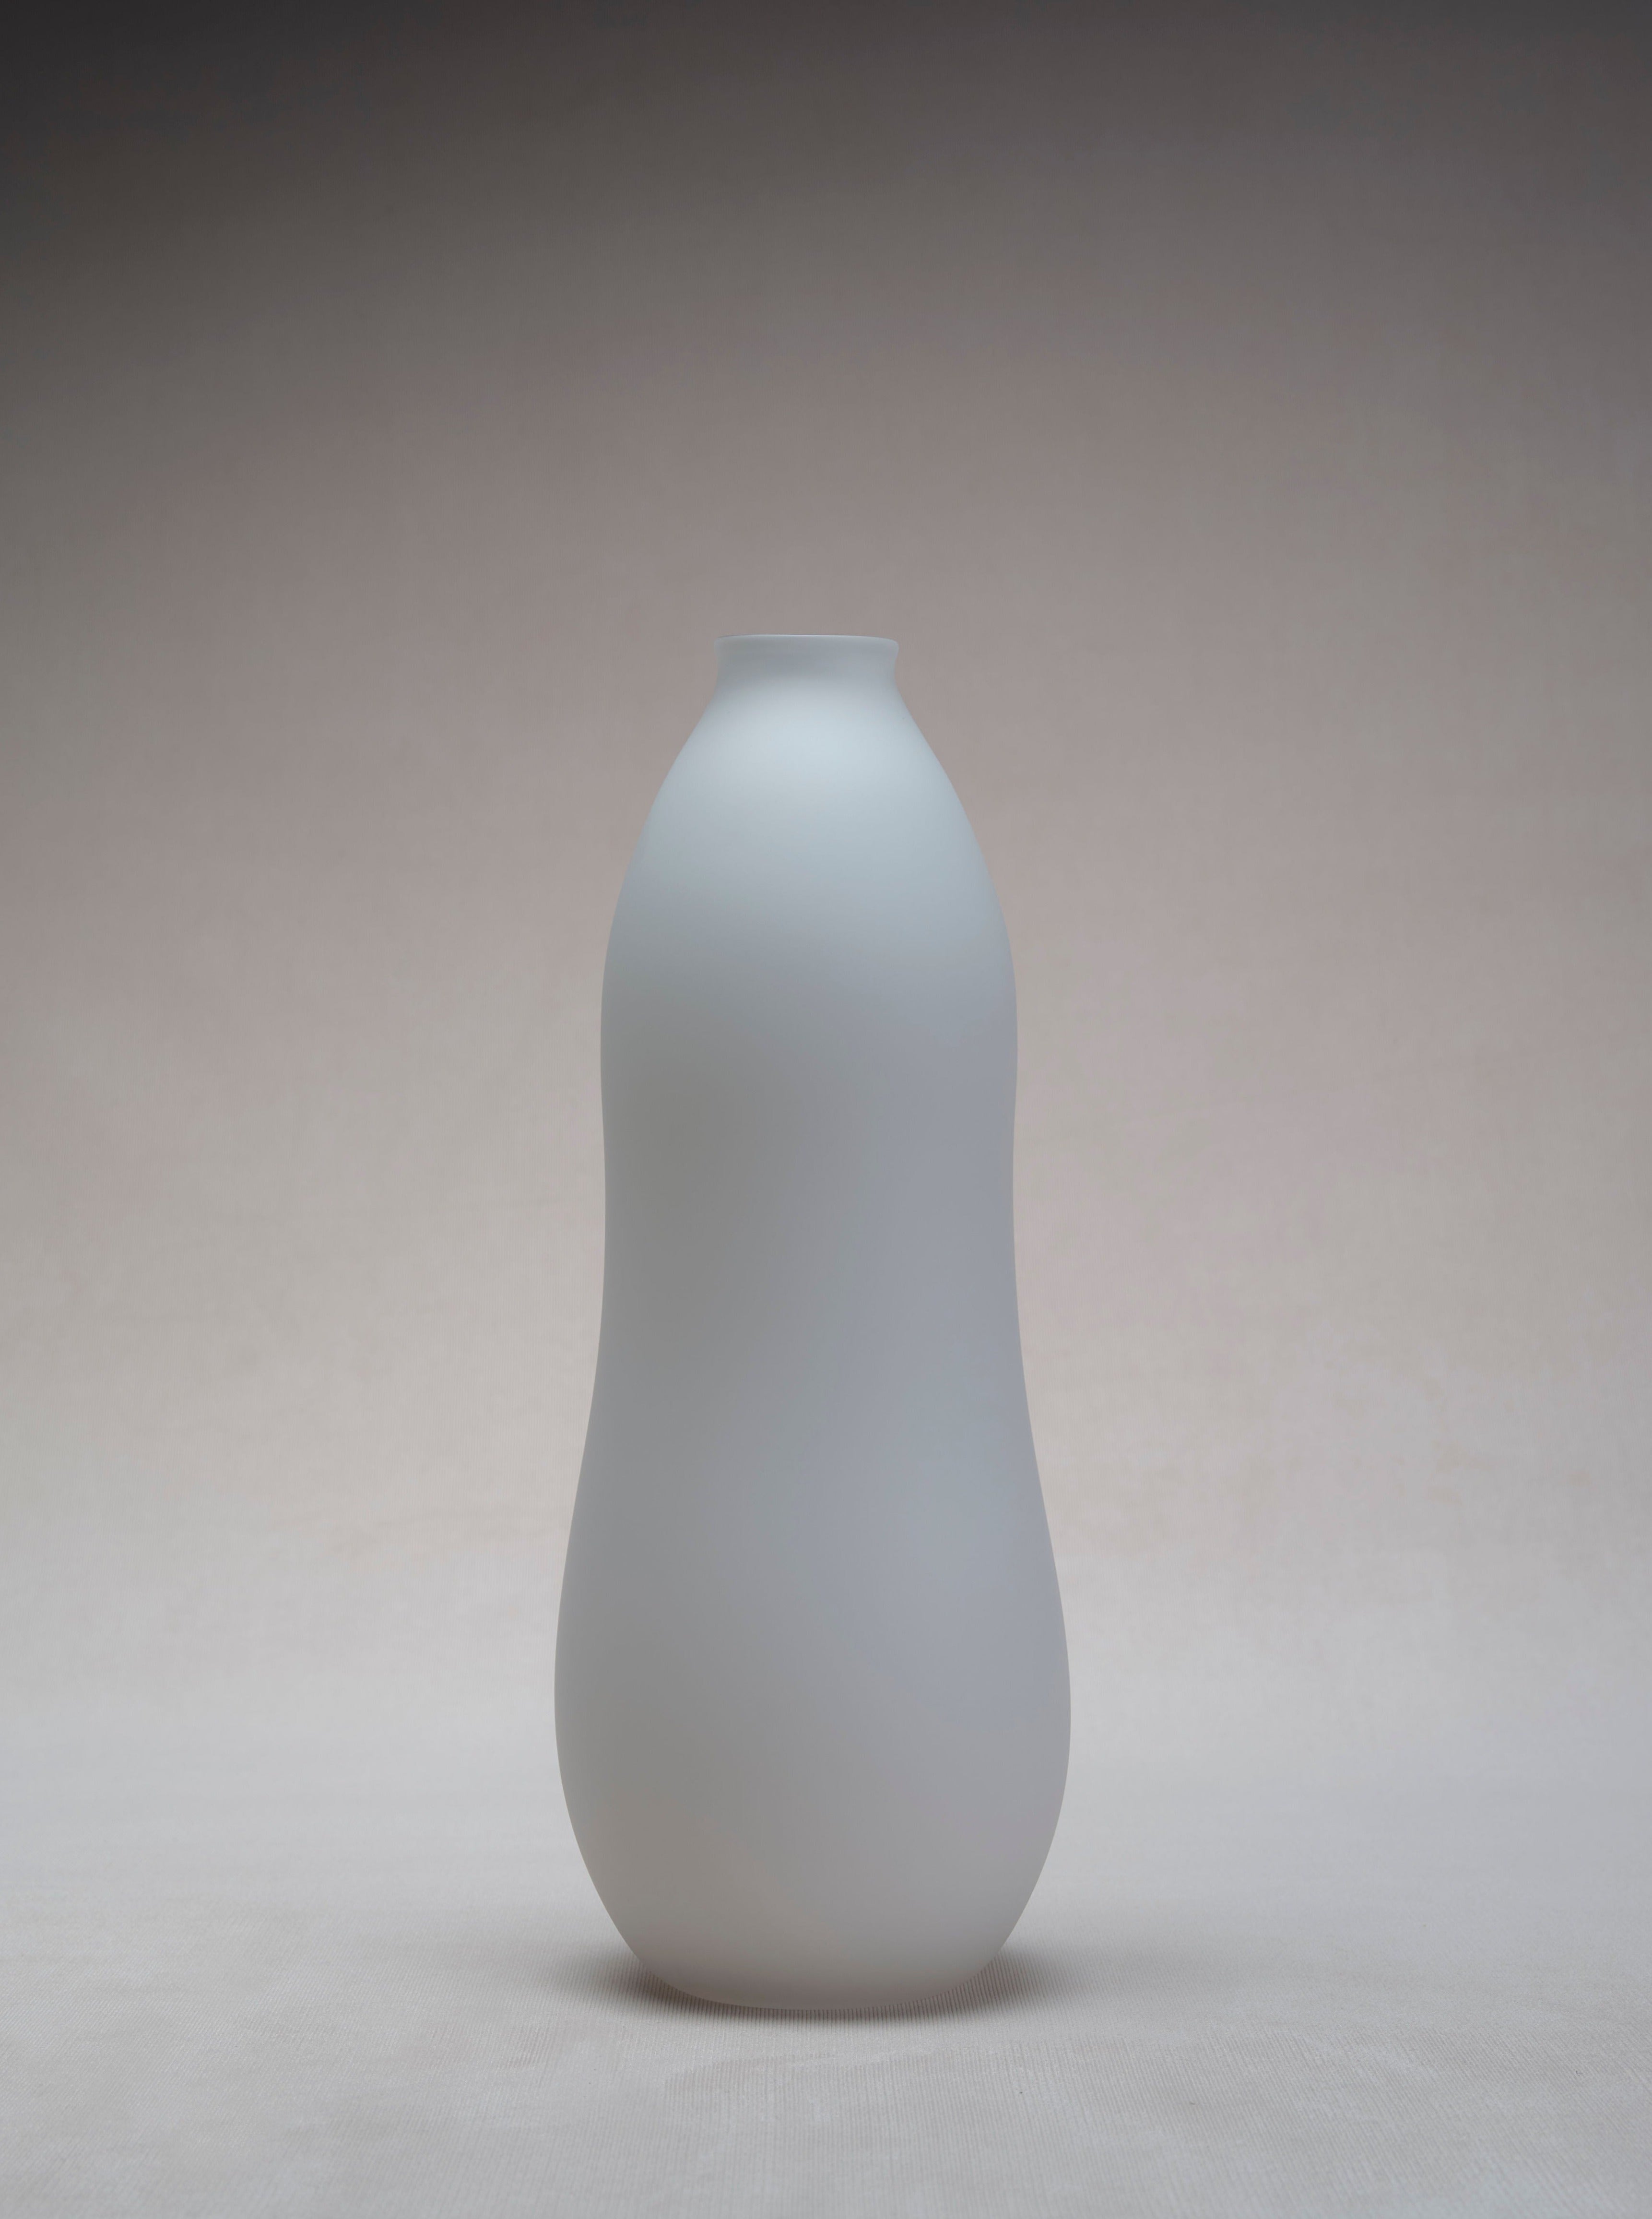 XLarge vase in Cotton